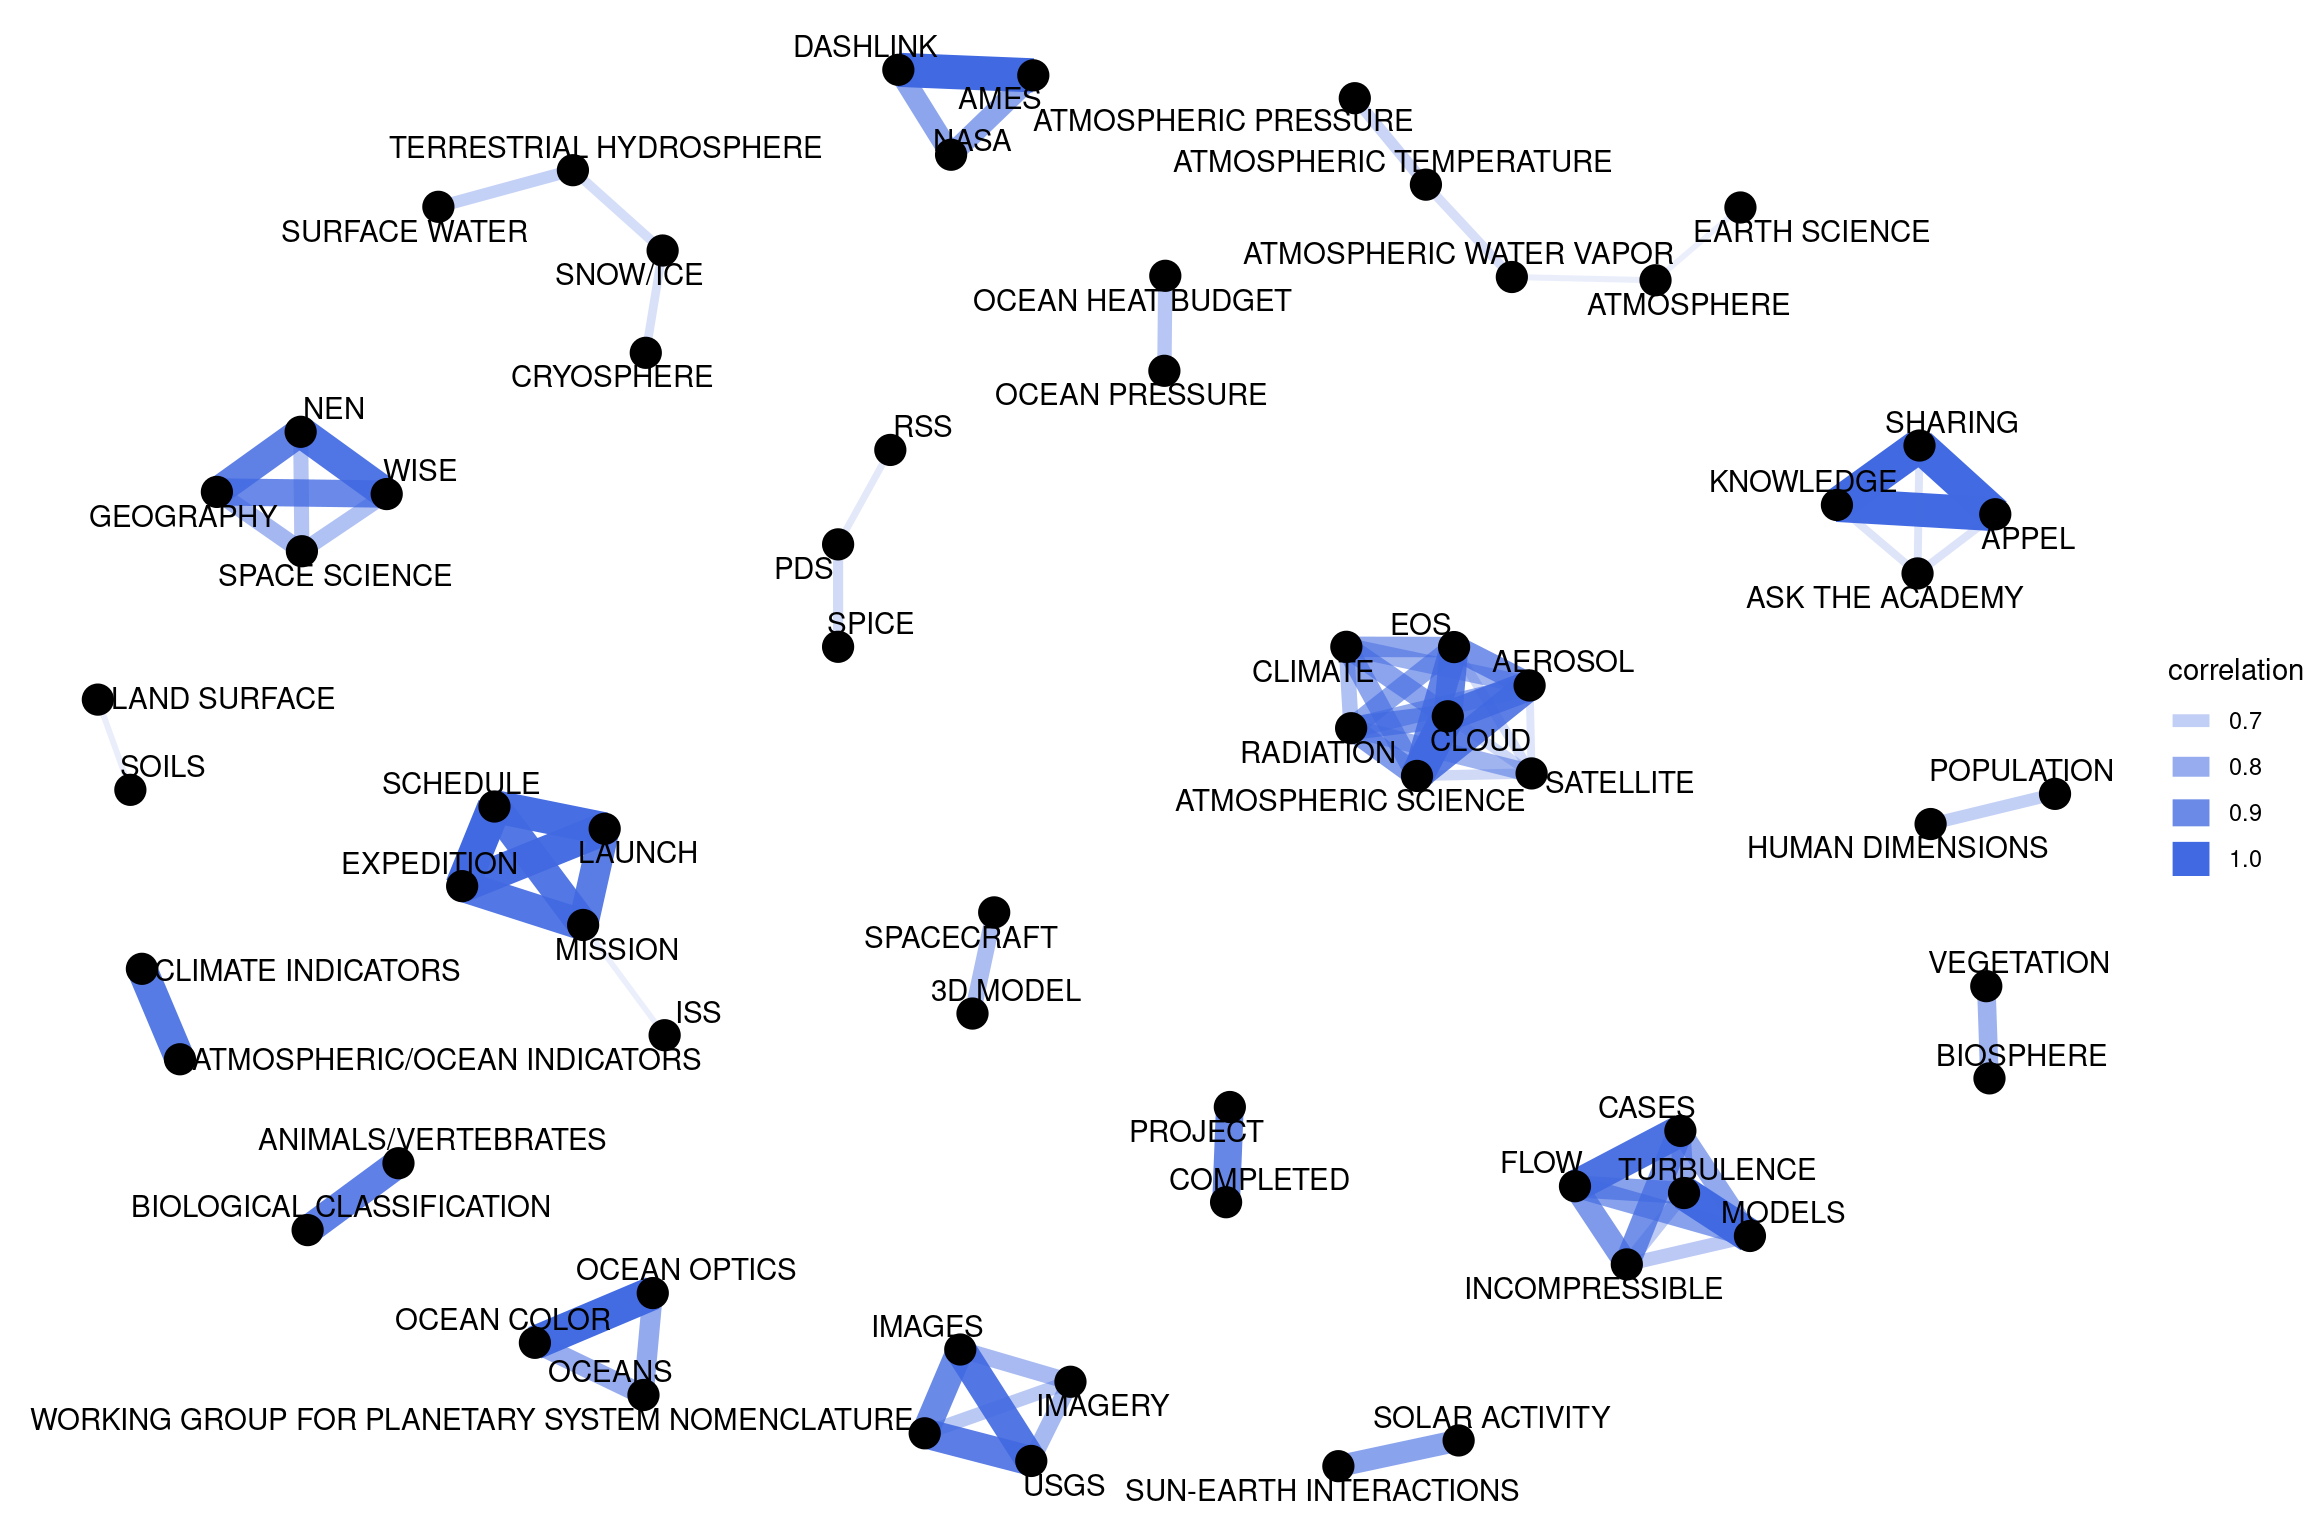 Correlation network in NASA dataset keywords